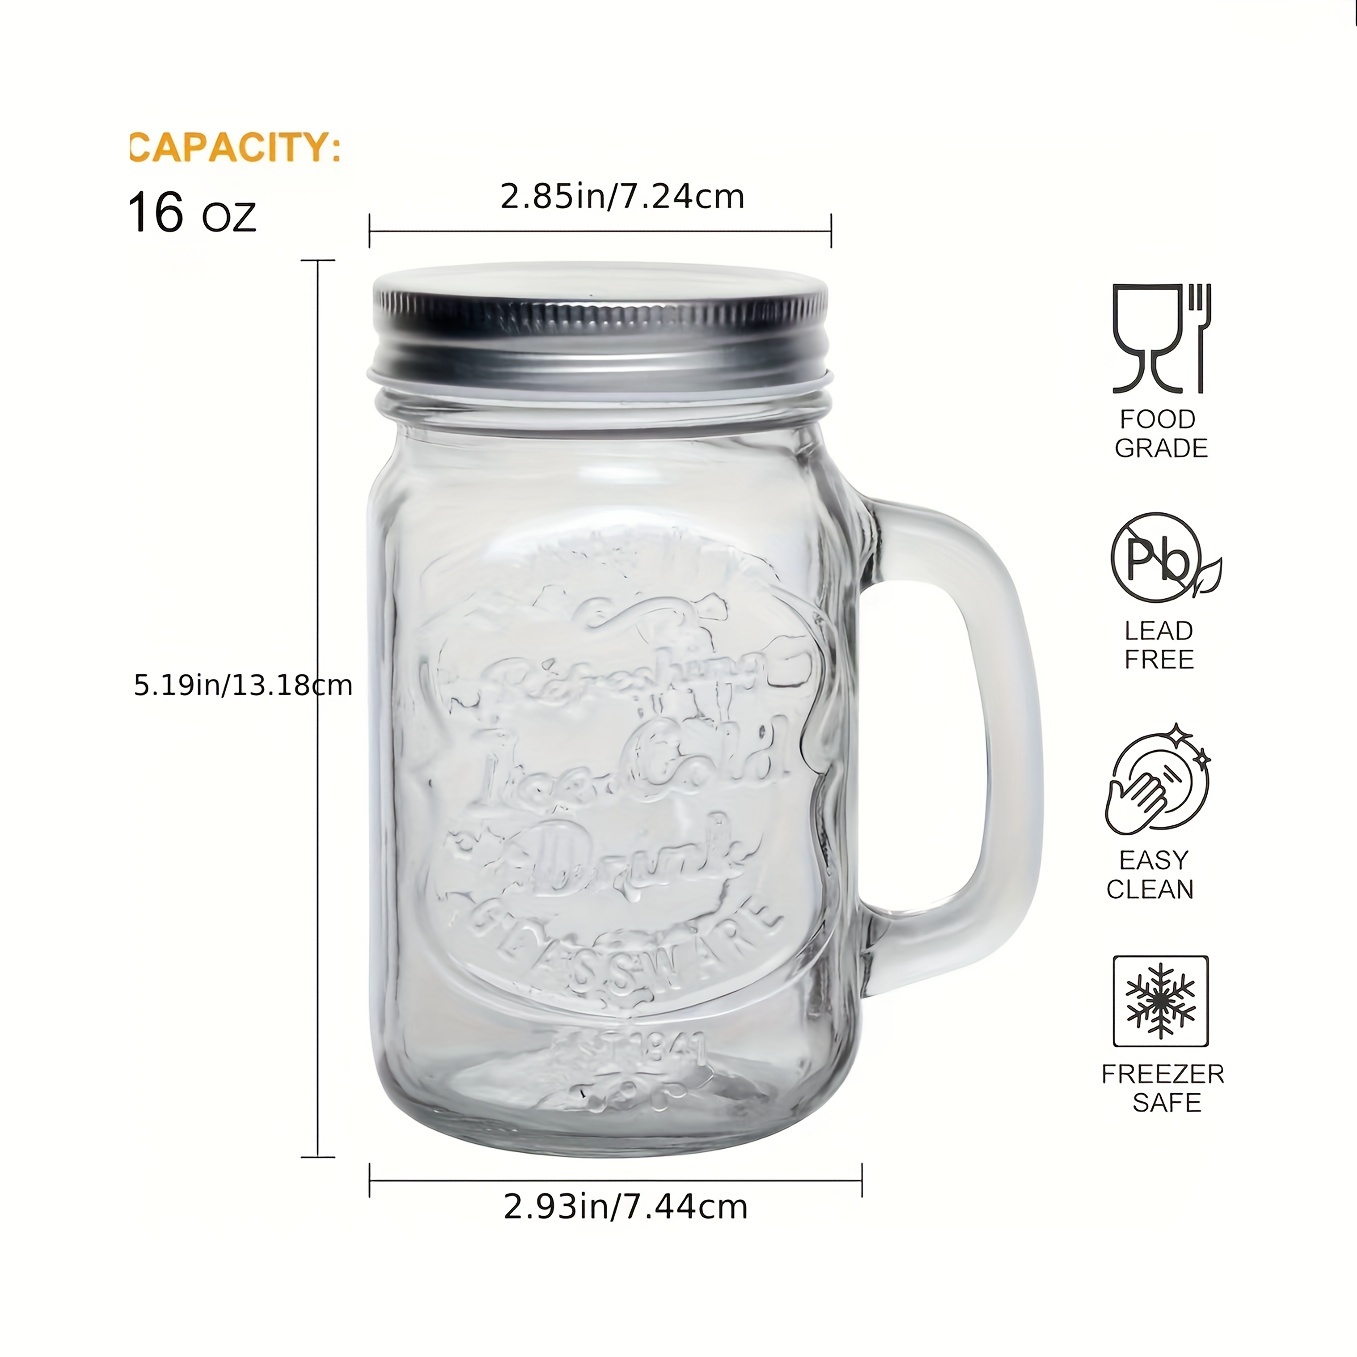 500ml Fruit Juice Cup Beverage Yogurt Glass Bottle with Handle and